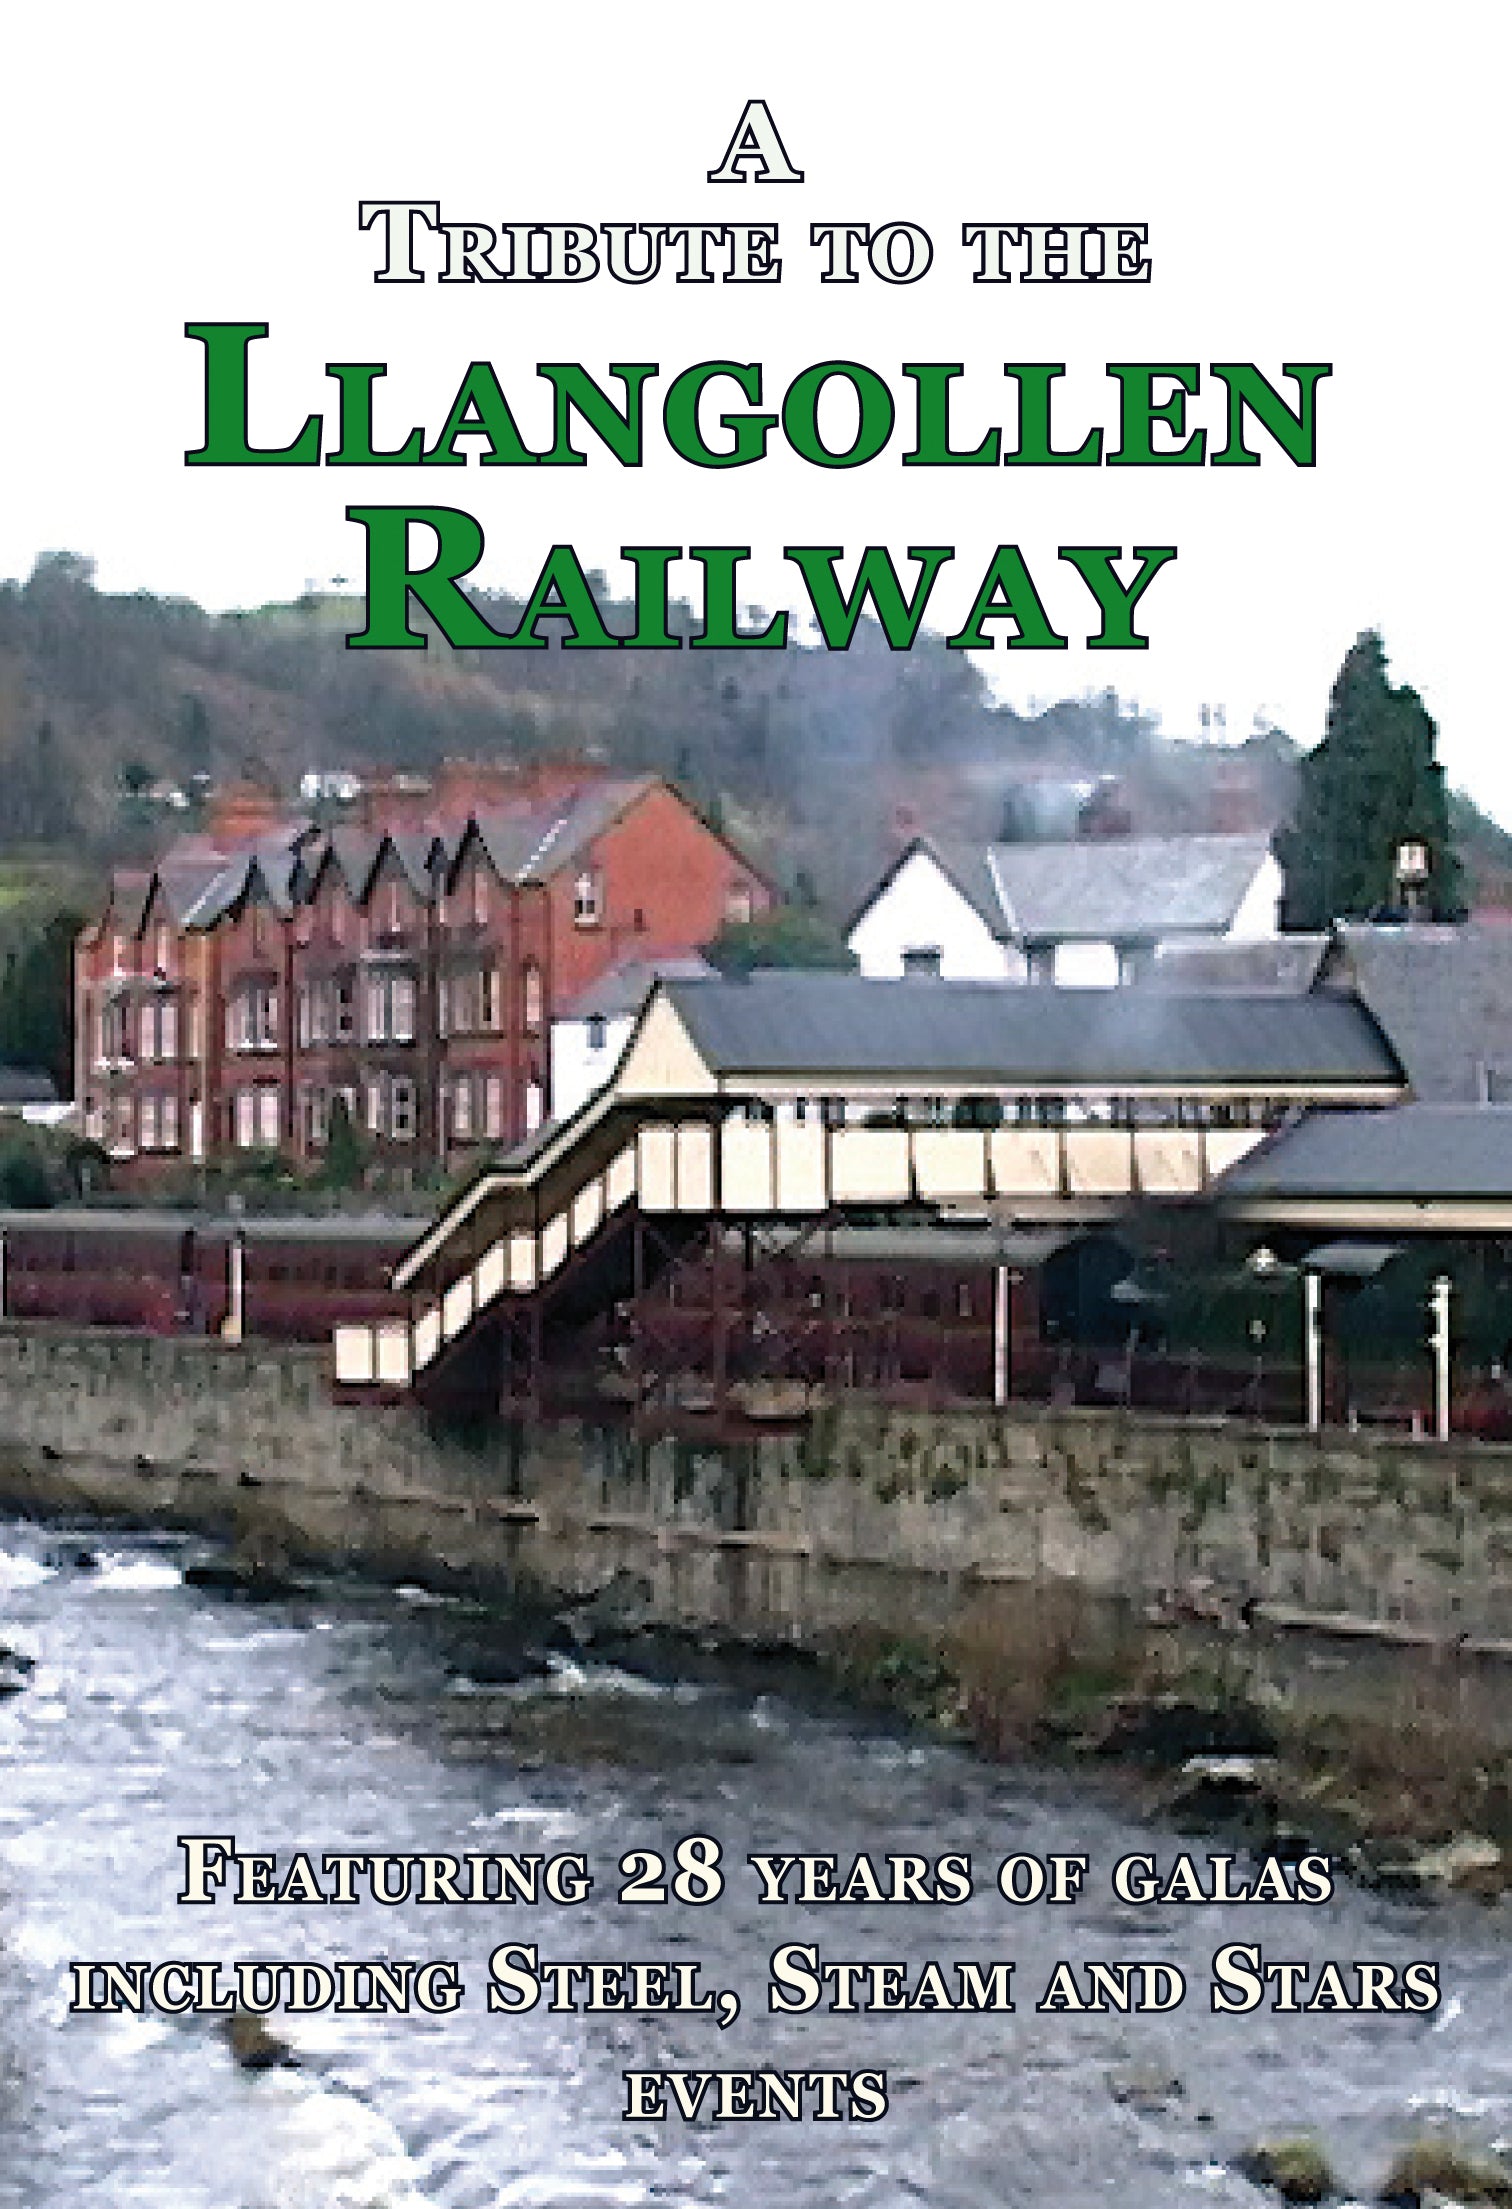 DVD Tribute to the Llangollen Railway